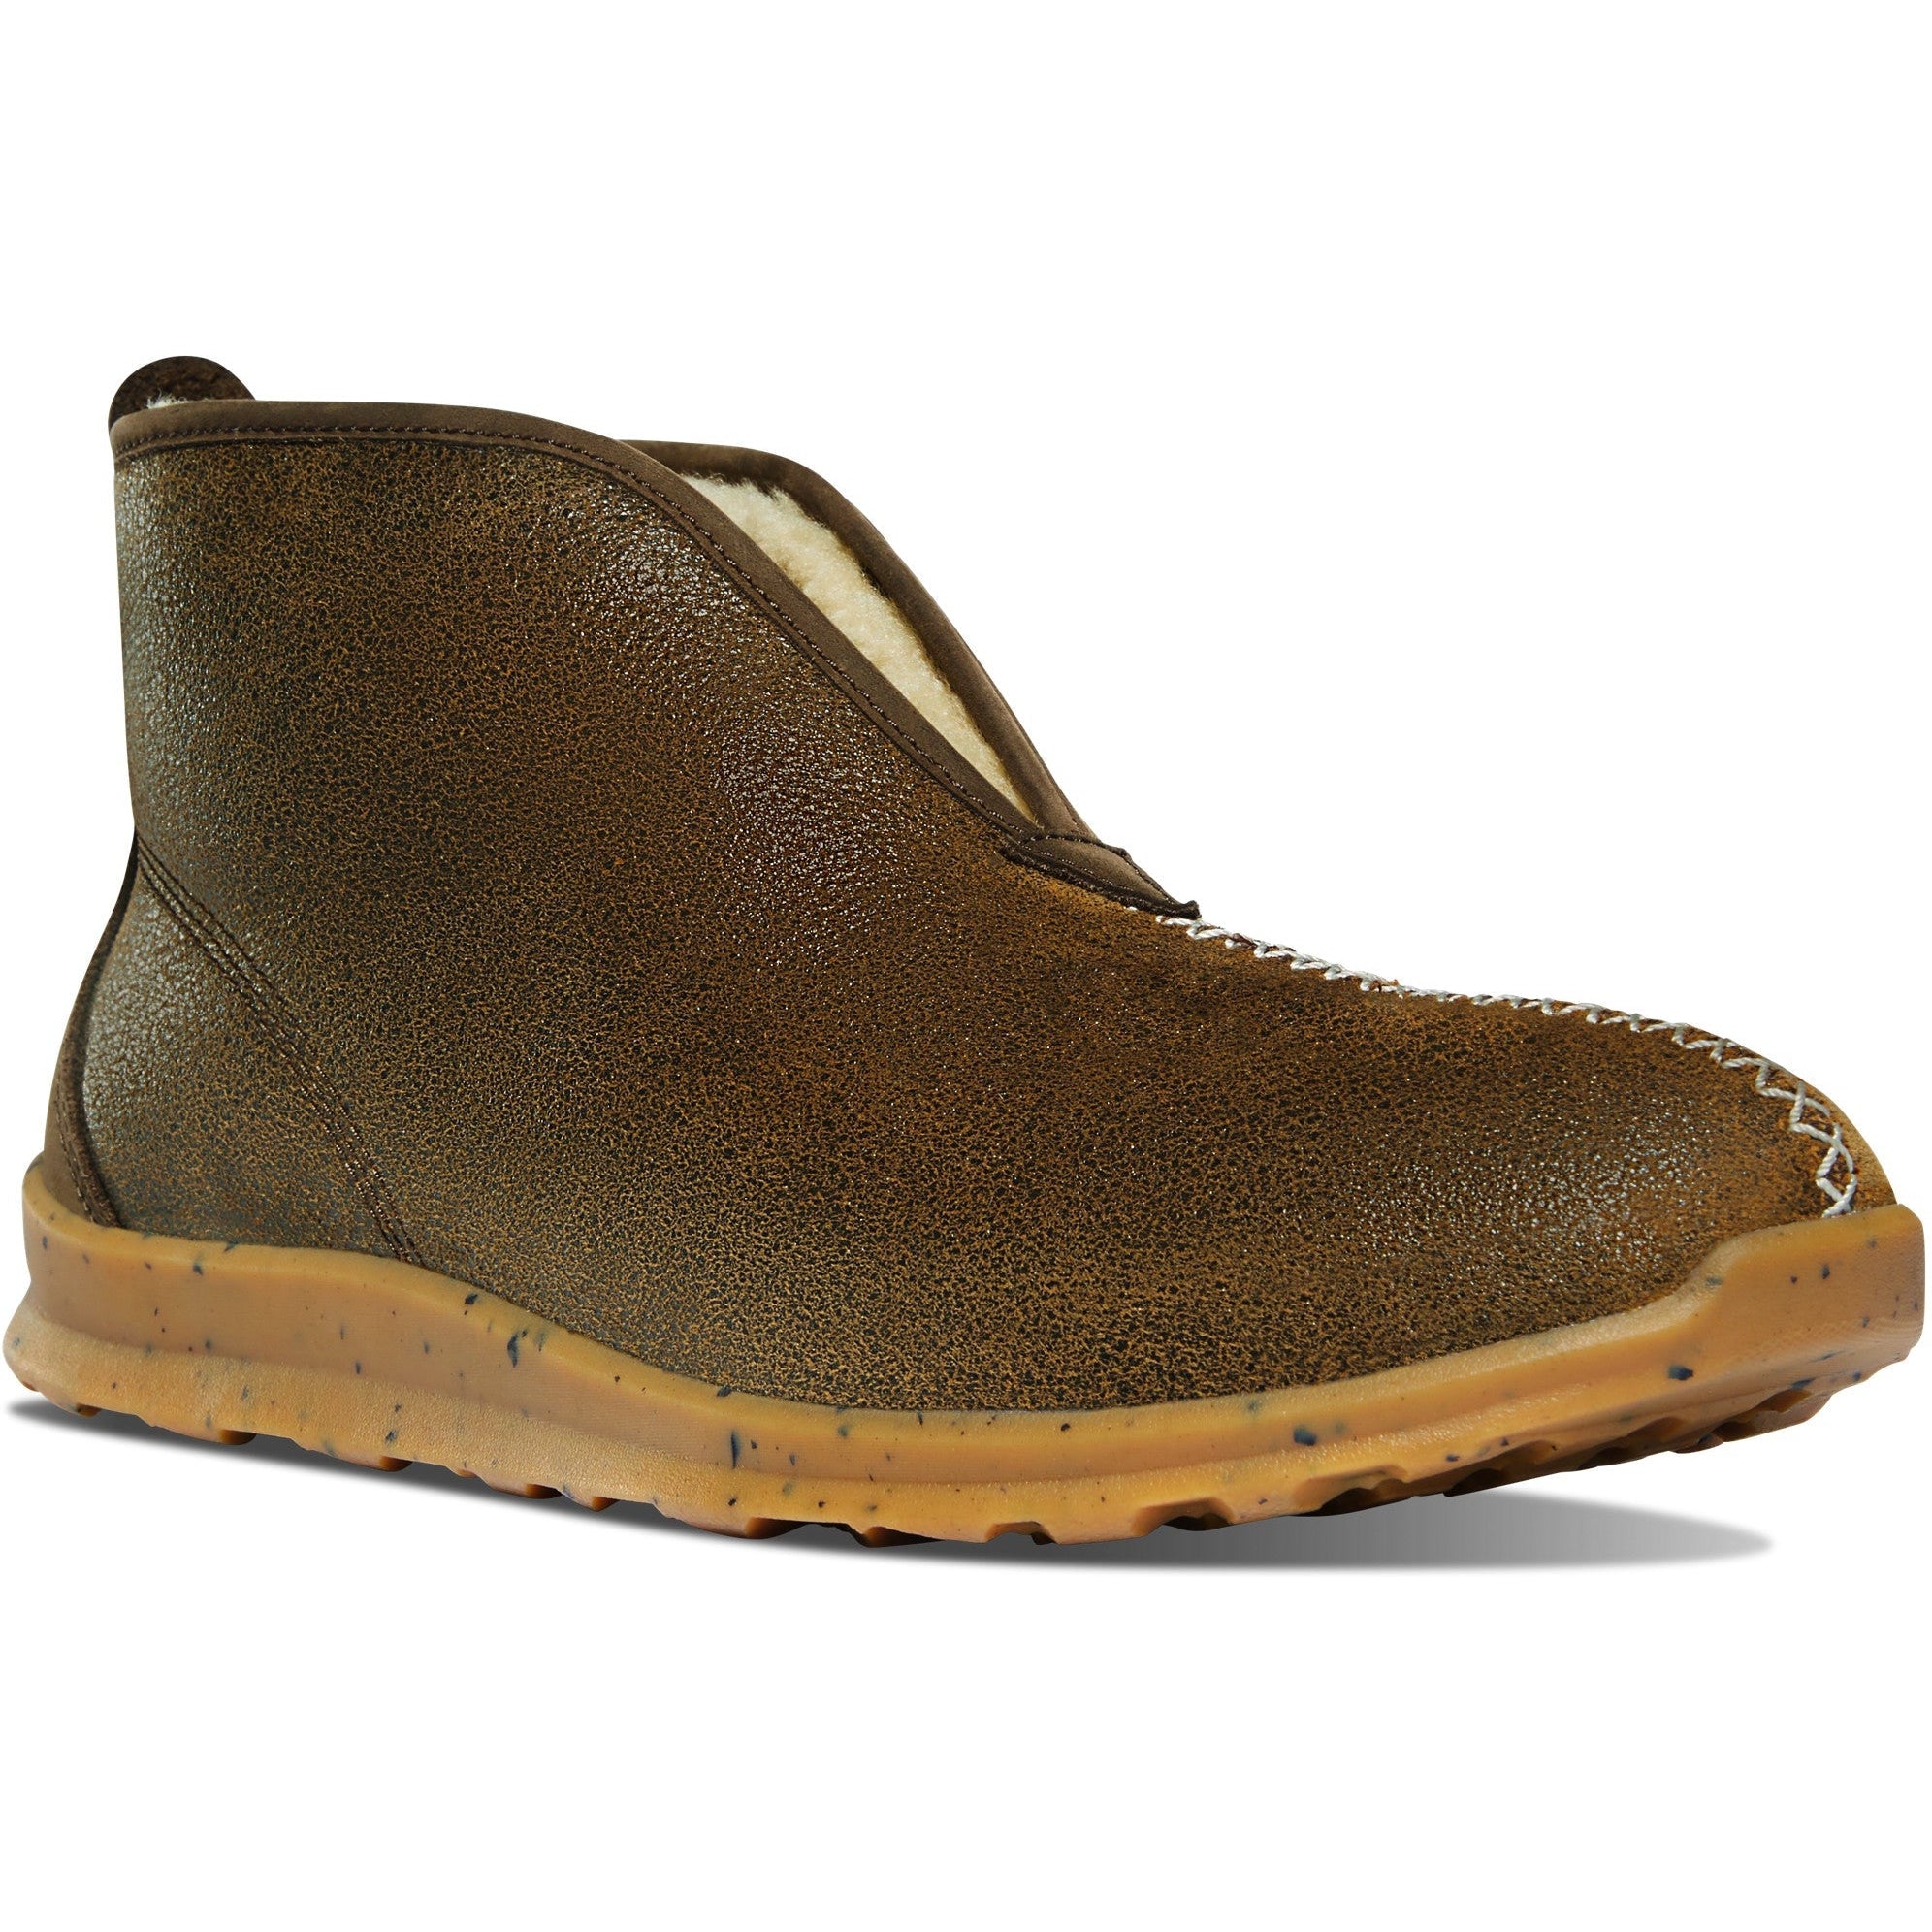 Danner Men's Forest Moc 5" Chukka Lifestyle Boot - Chestnut - 37682 7 / Medium / Brown - Overlook Boots